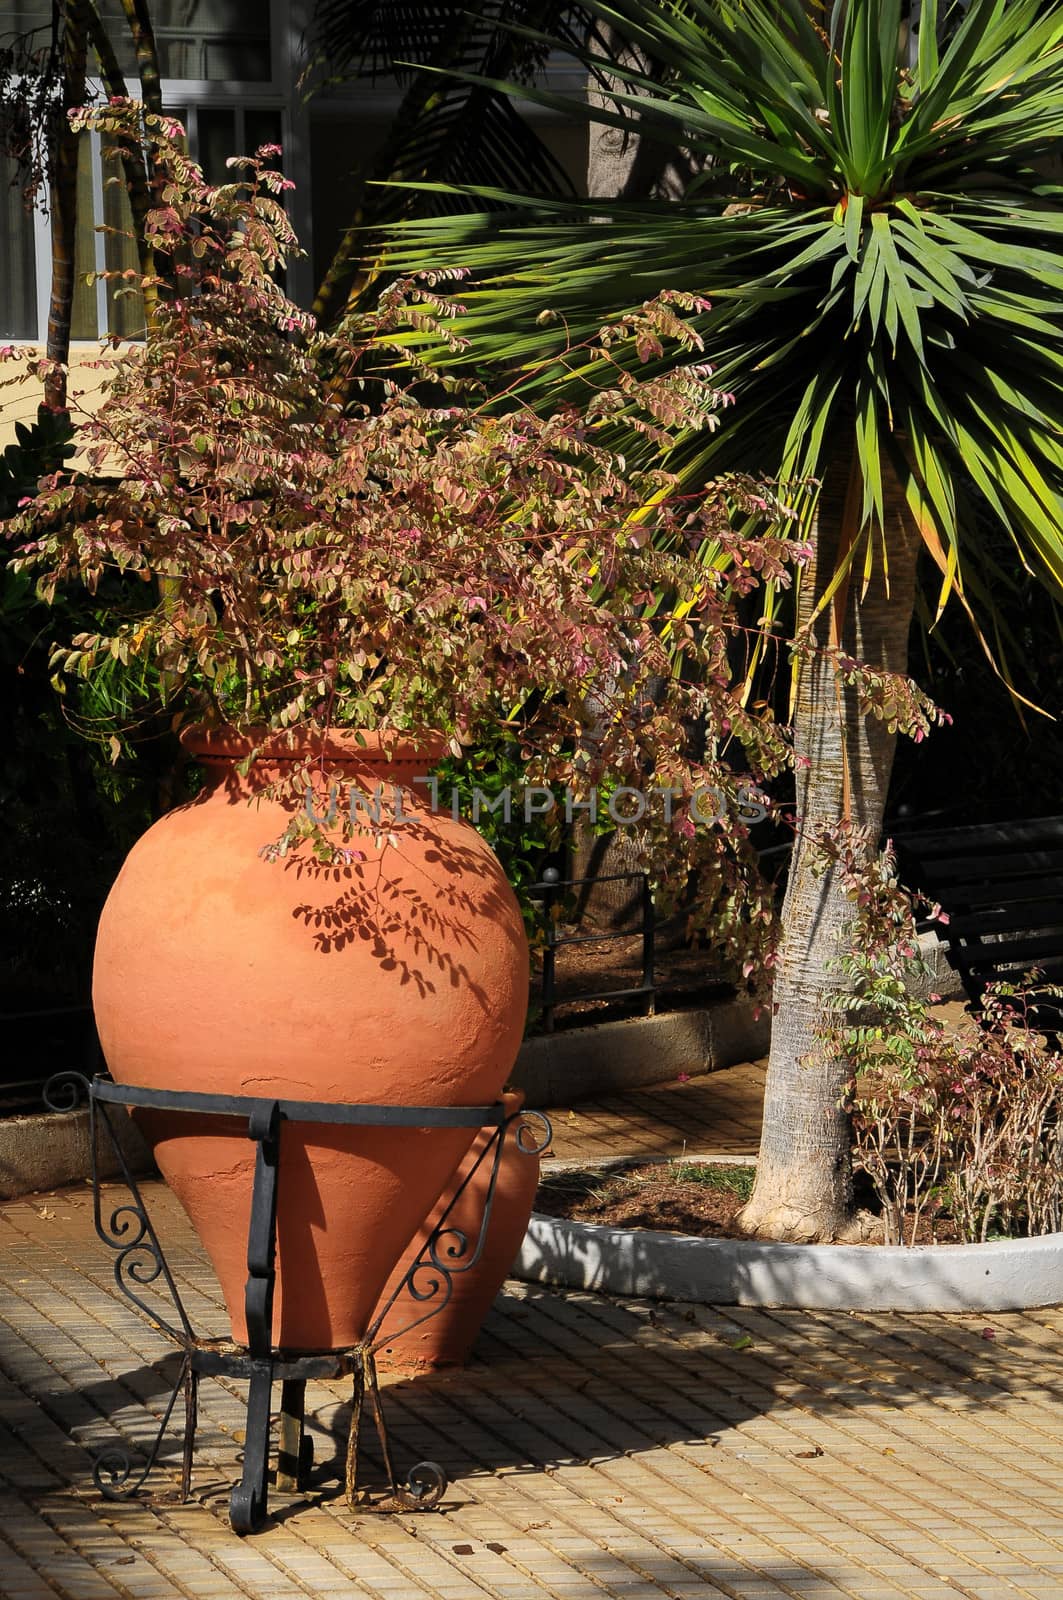 Terracotta Vases with Plants on an Urban Garden